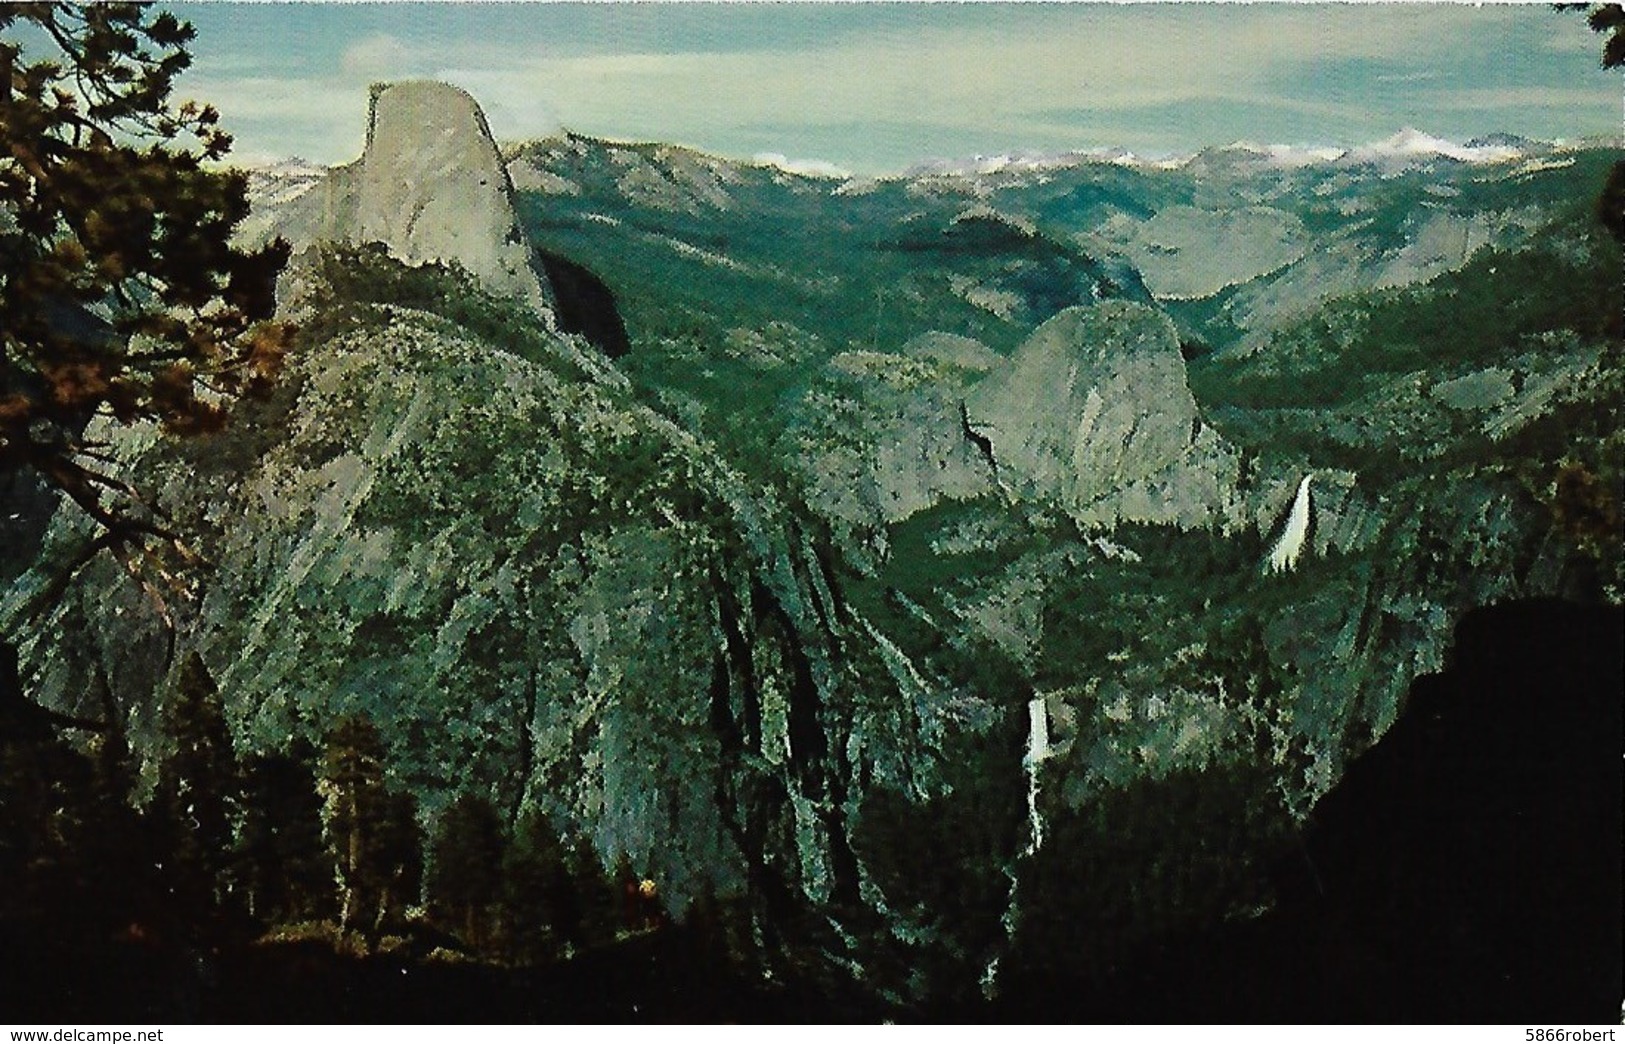 CARTE POSTALE ORIGINALE DE 9CM/14CM : YOSEMITE NATIONAL PARK CALIFORNIA THE HIGH SIERRA FROM GLACIER POINT   USA - Yosemite